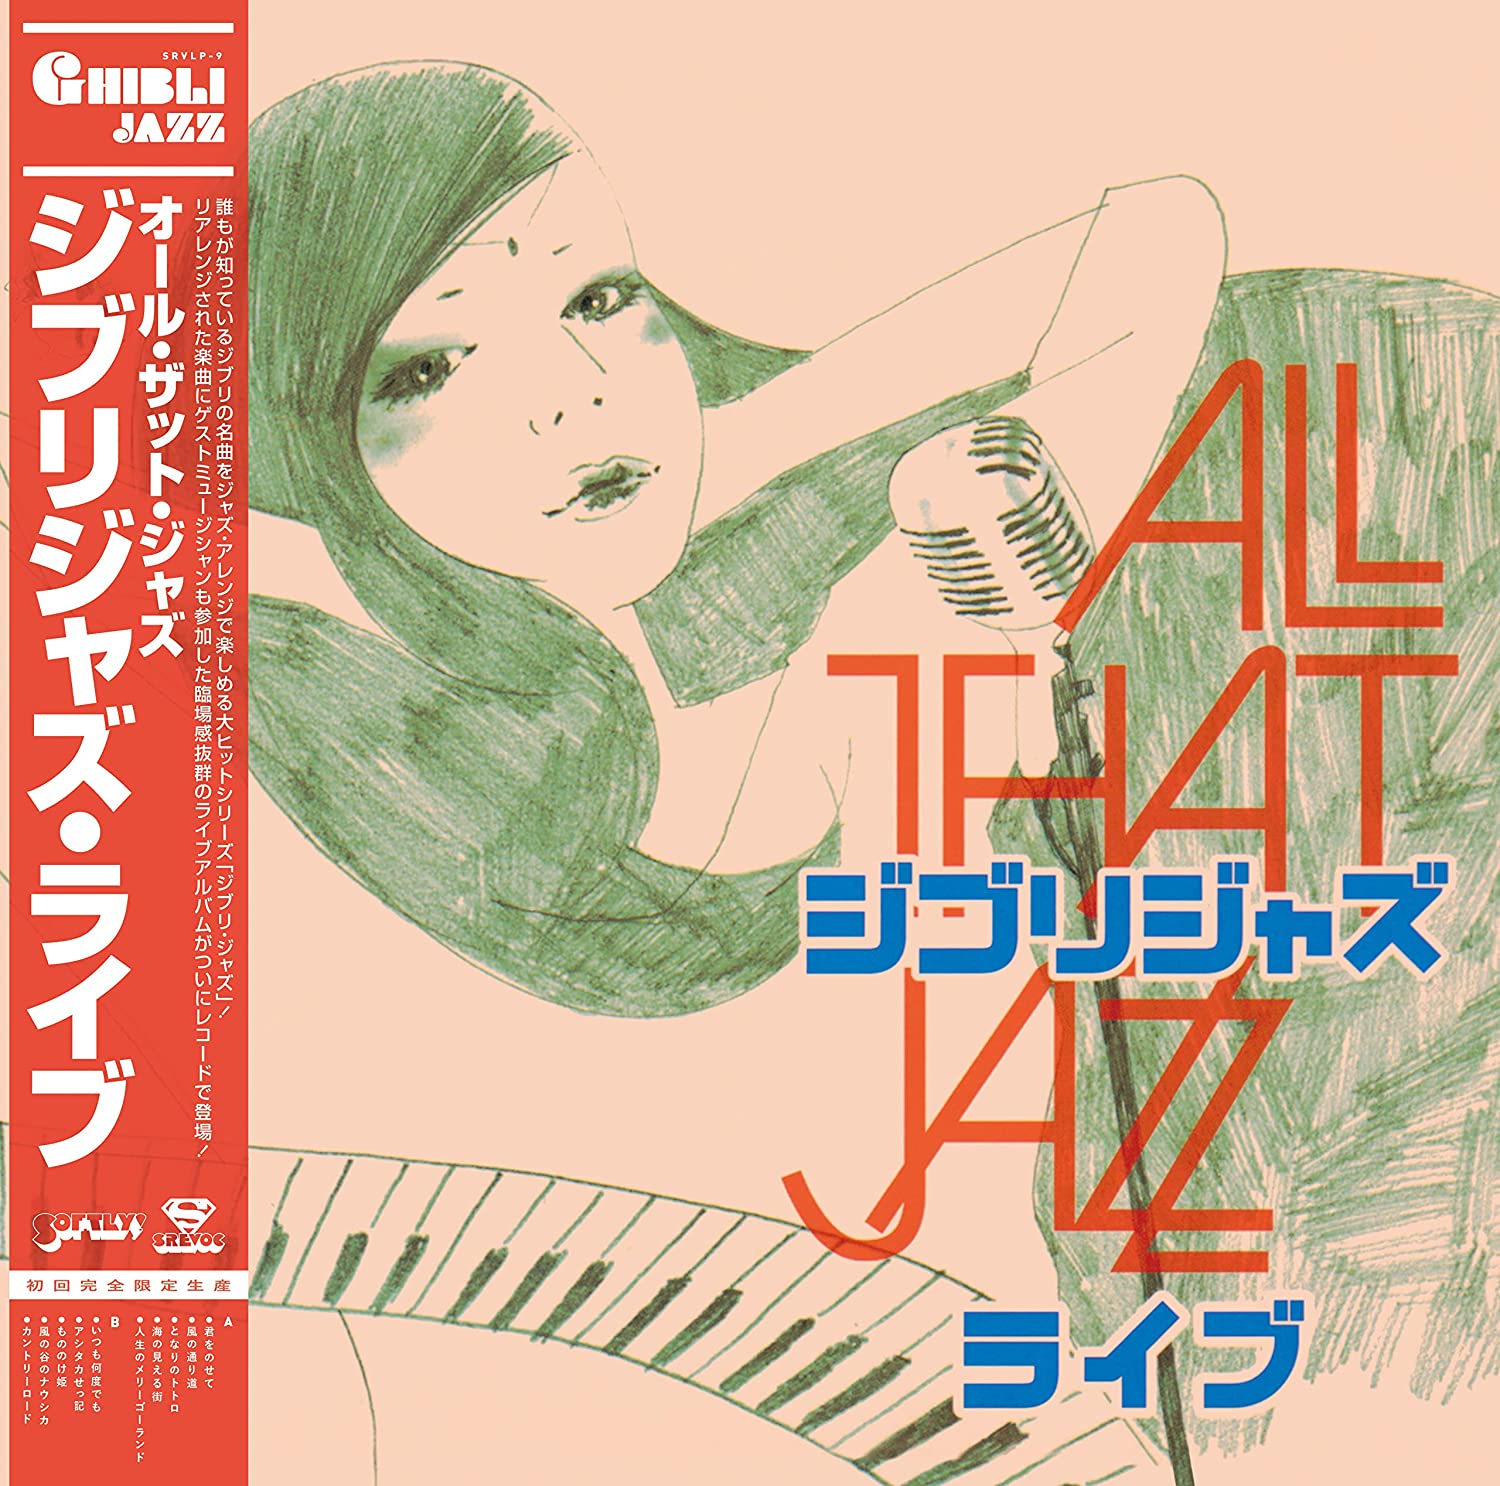 SRVLP-9 - All That Jazz - Ghibli Jazz Live